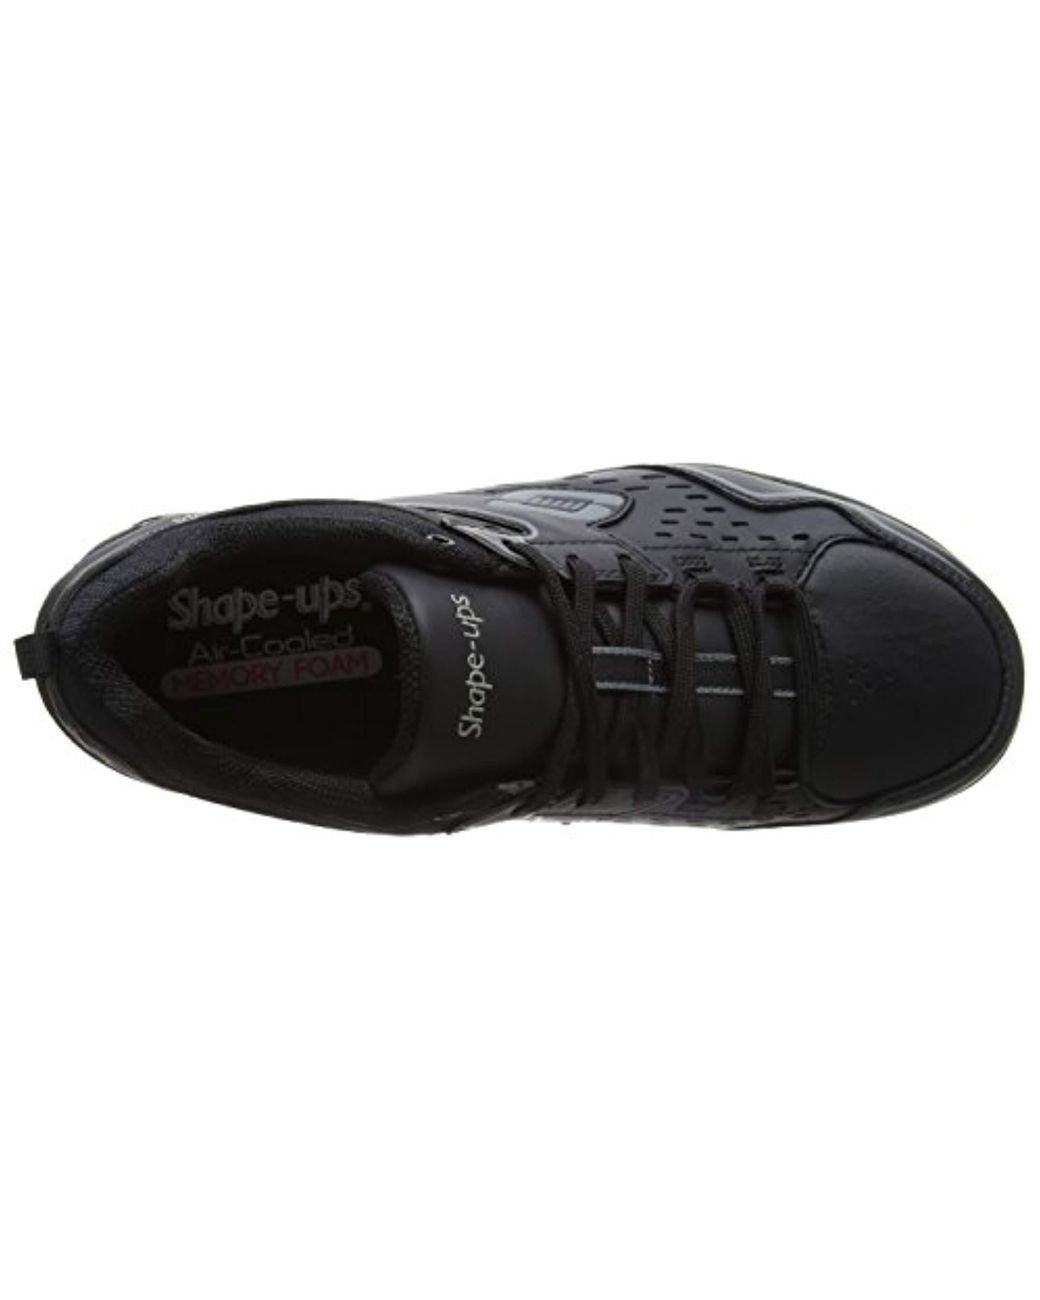 Skechers Shape Ups 20 Perfect Comfort Fashion Sneaker, $62, .com